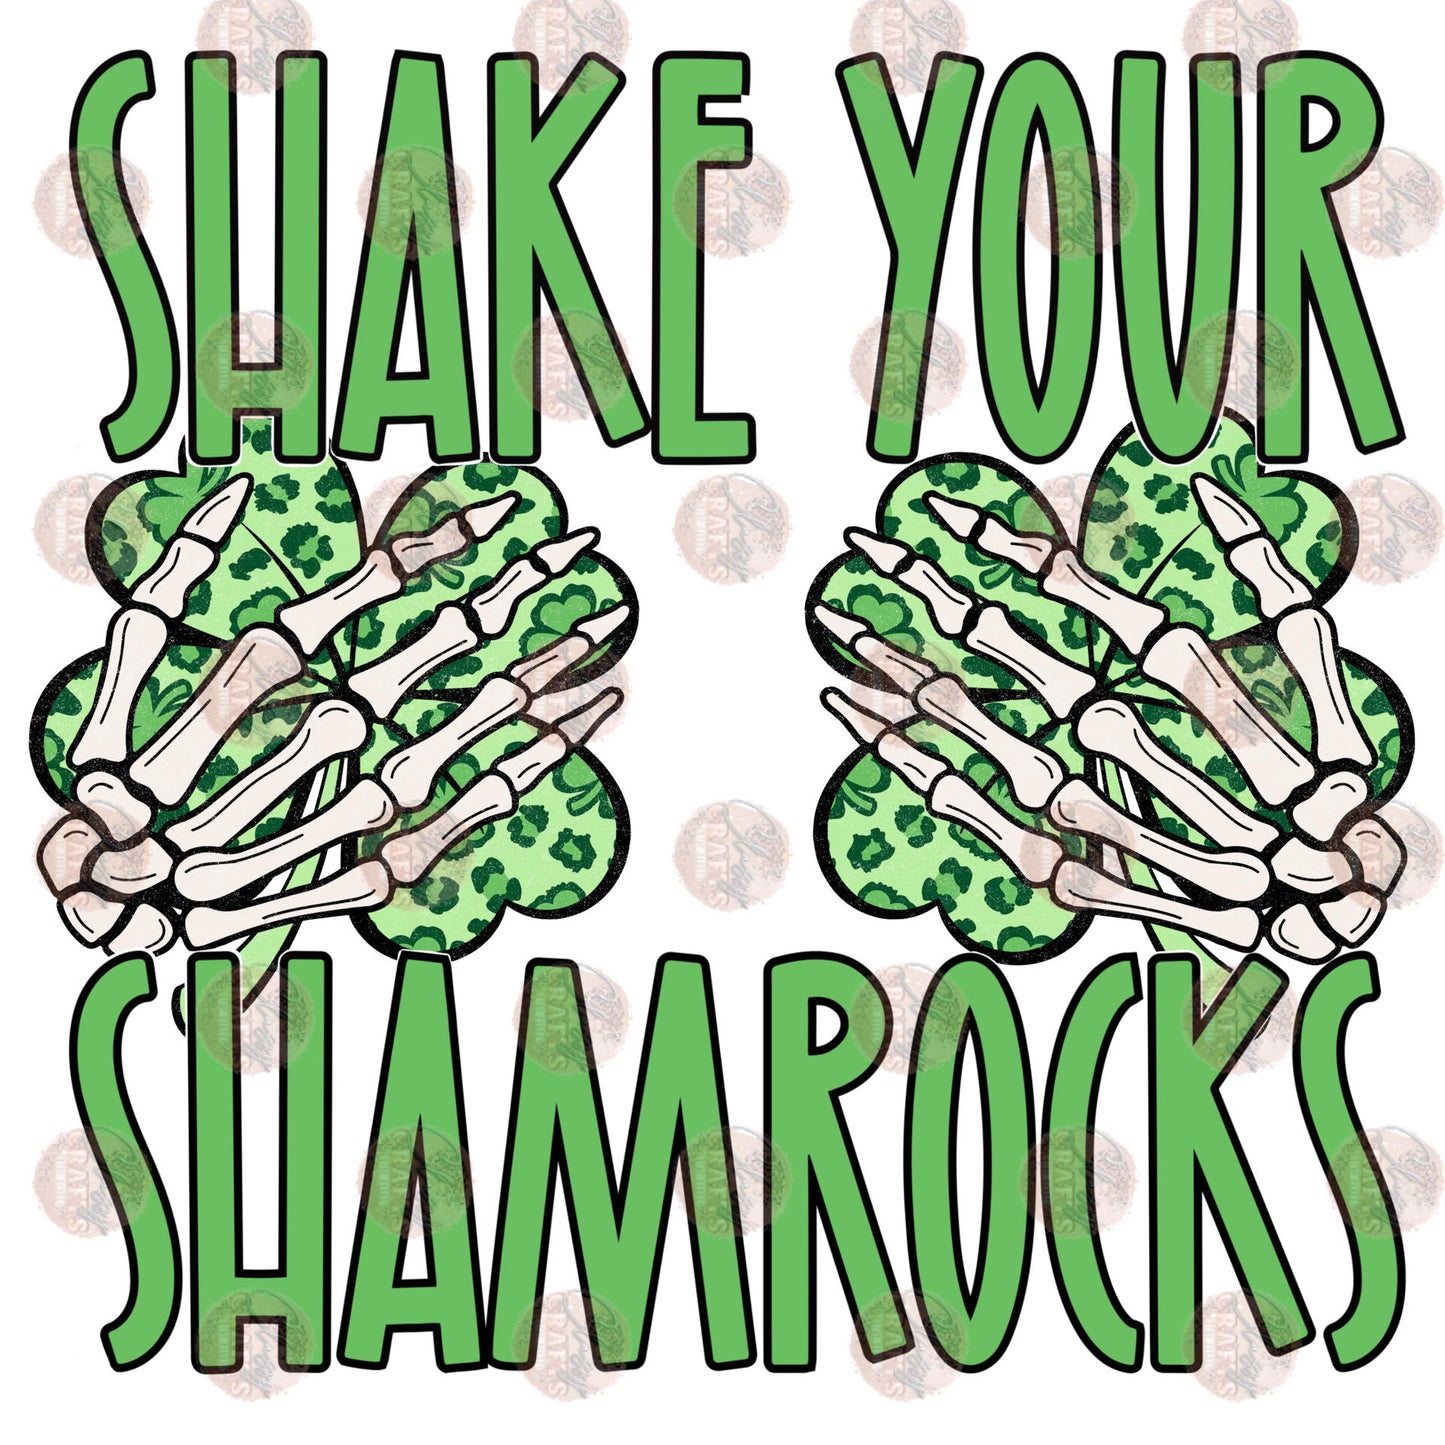 Shake Your Shamrocks Transfer